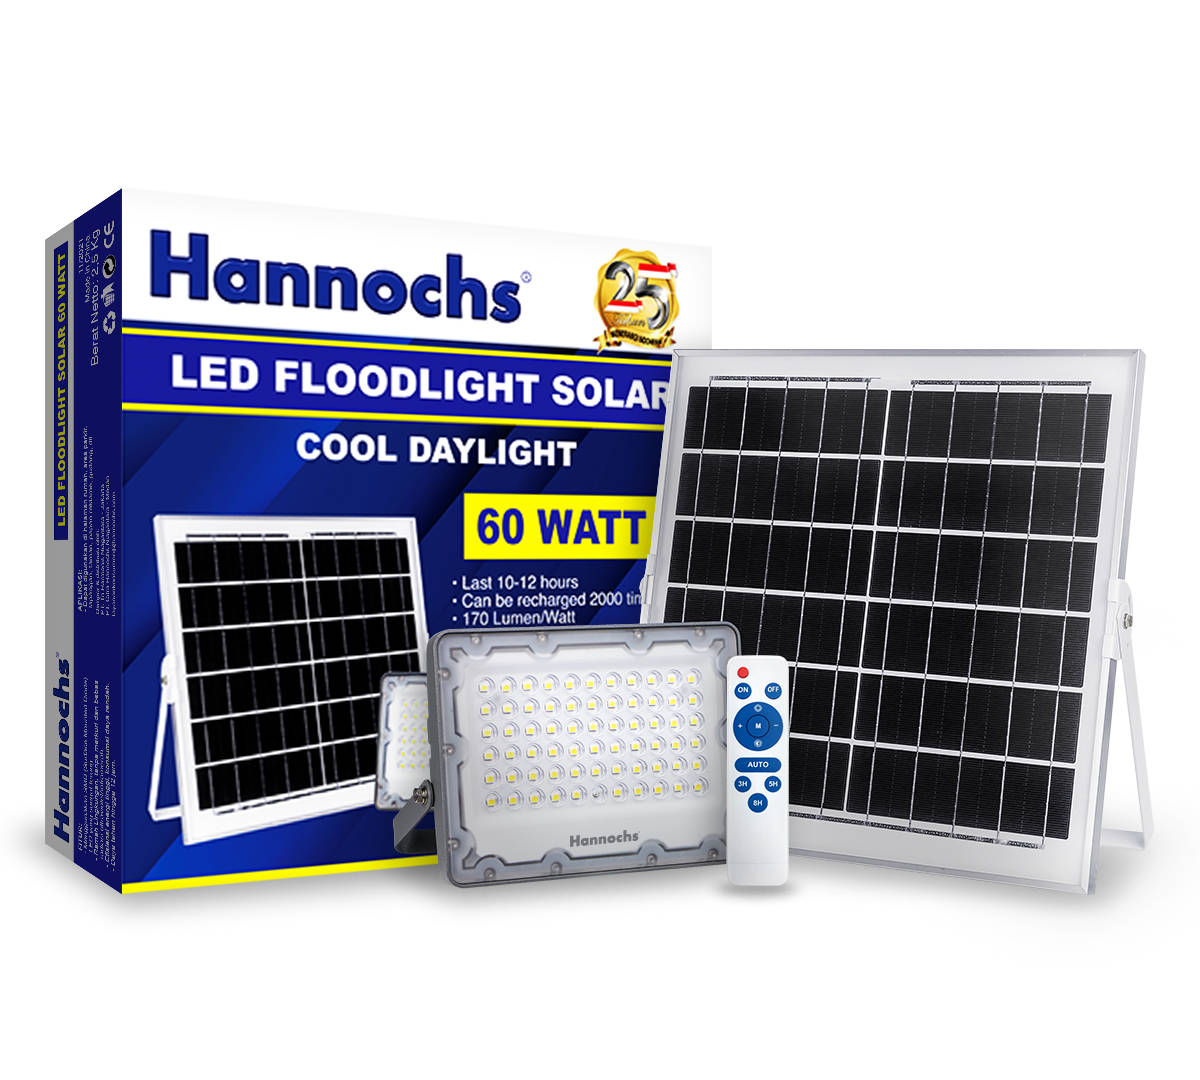 LED Floodlight Solar